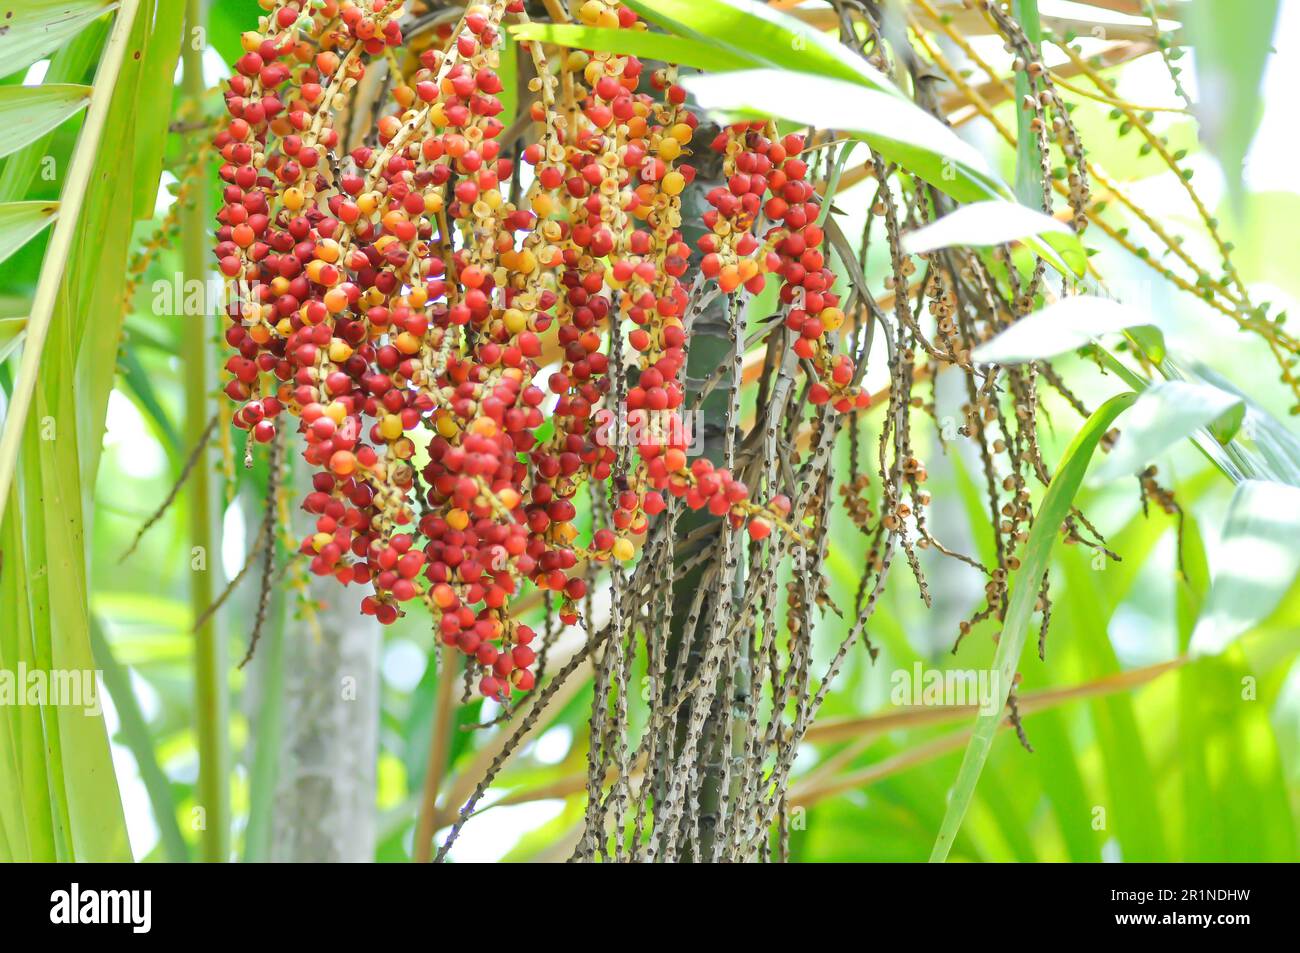 seme di palma di betel o di noce di betel o seme di palma sull'albero Foto Stock